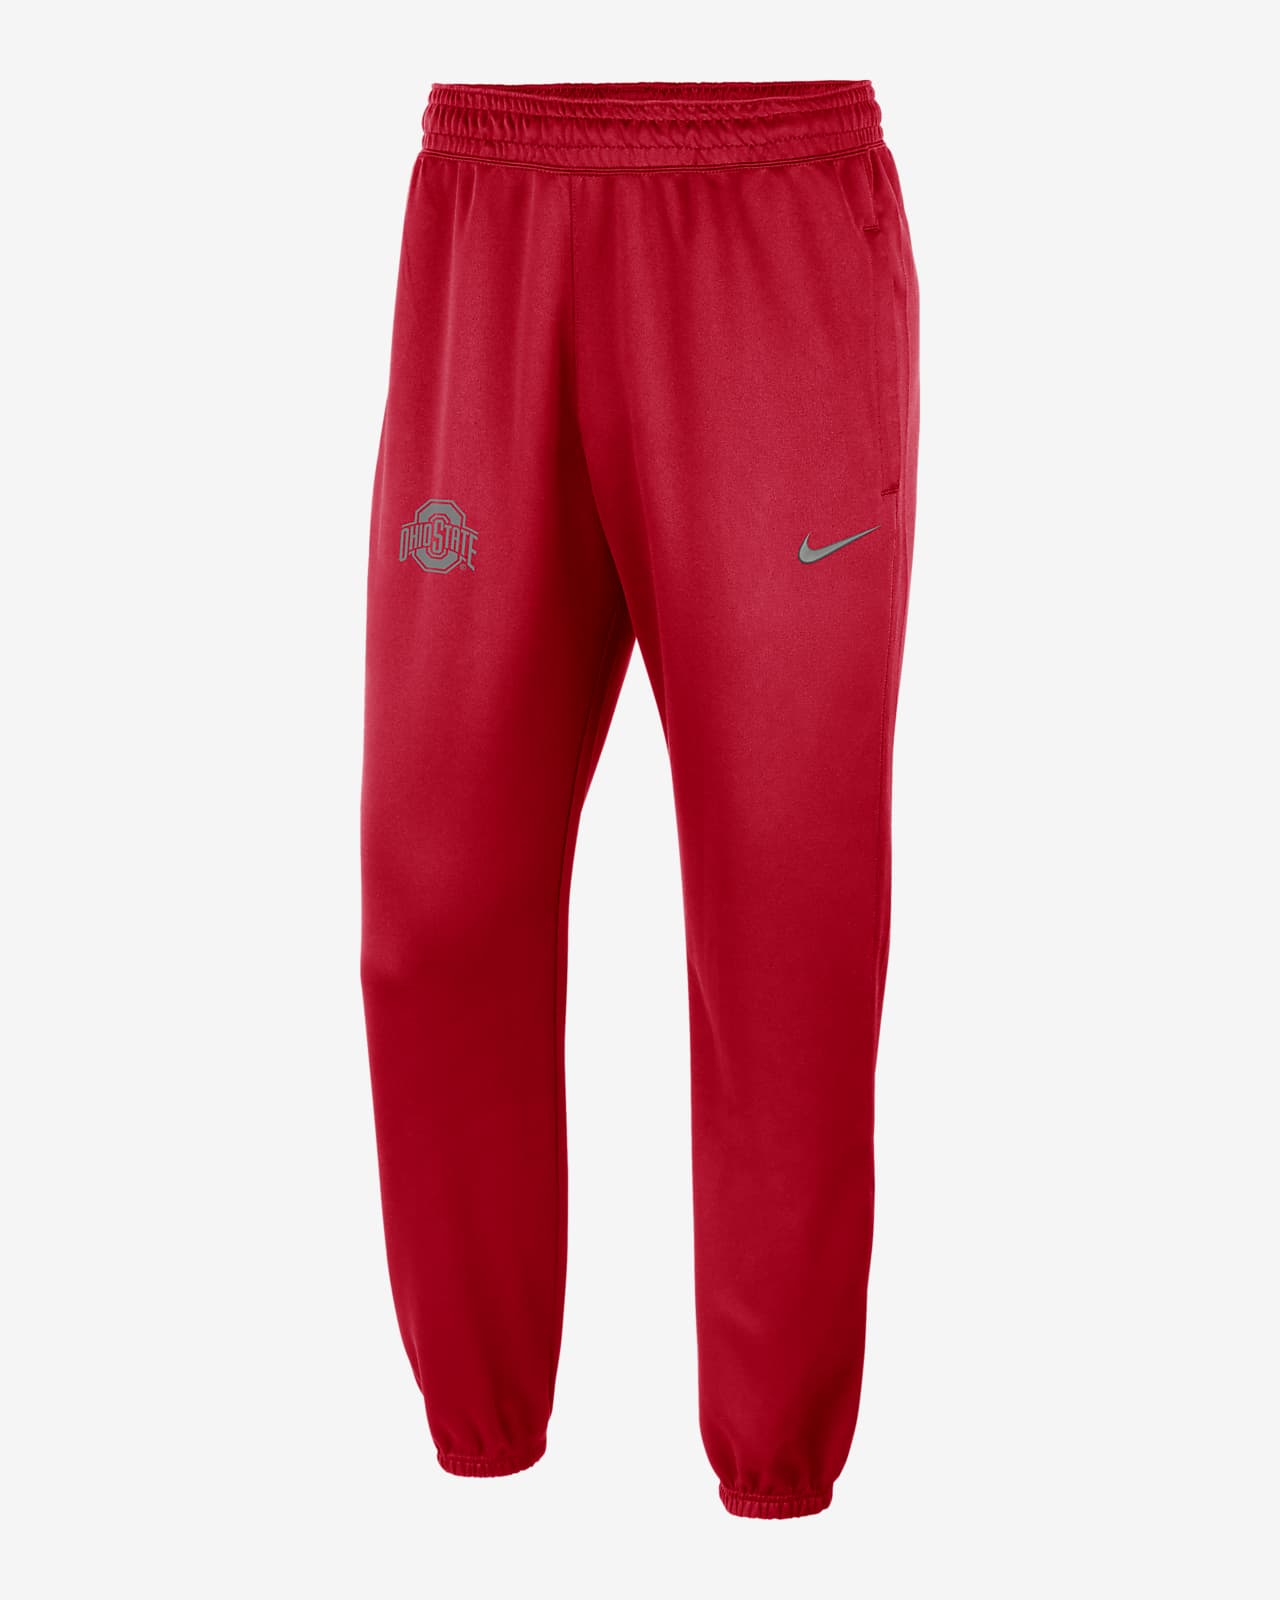 Nike College Dri-FIT Spotlight (Ohio State) Men's Pants